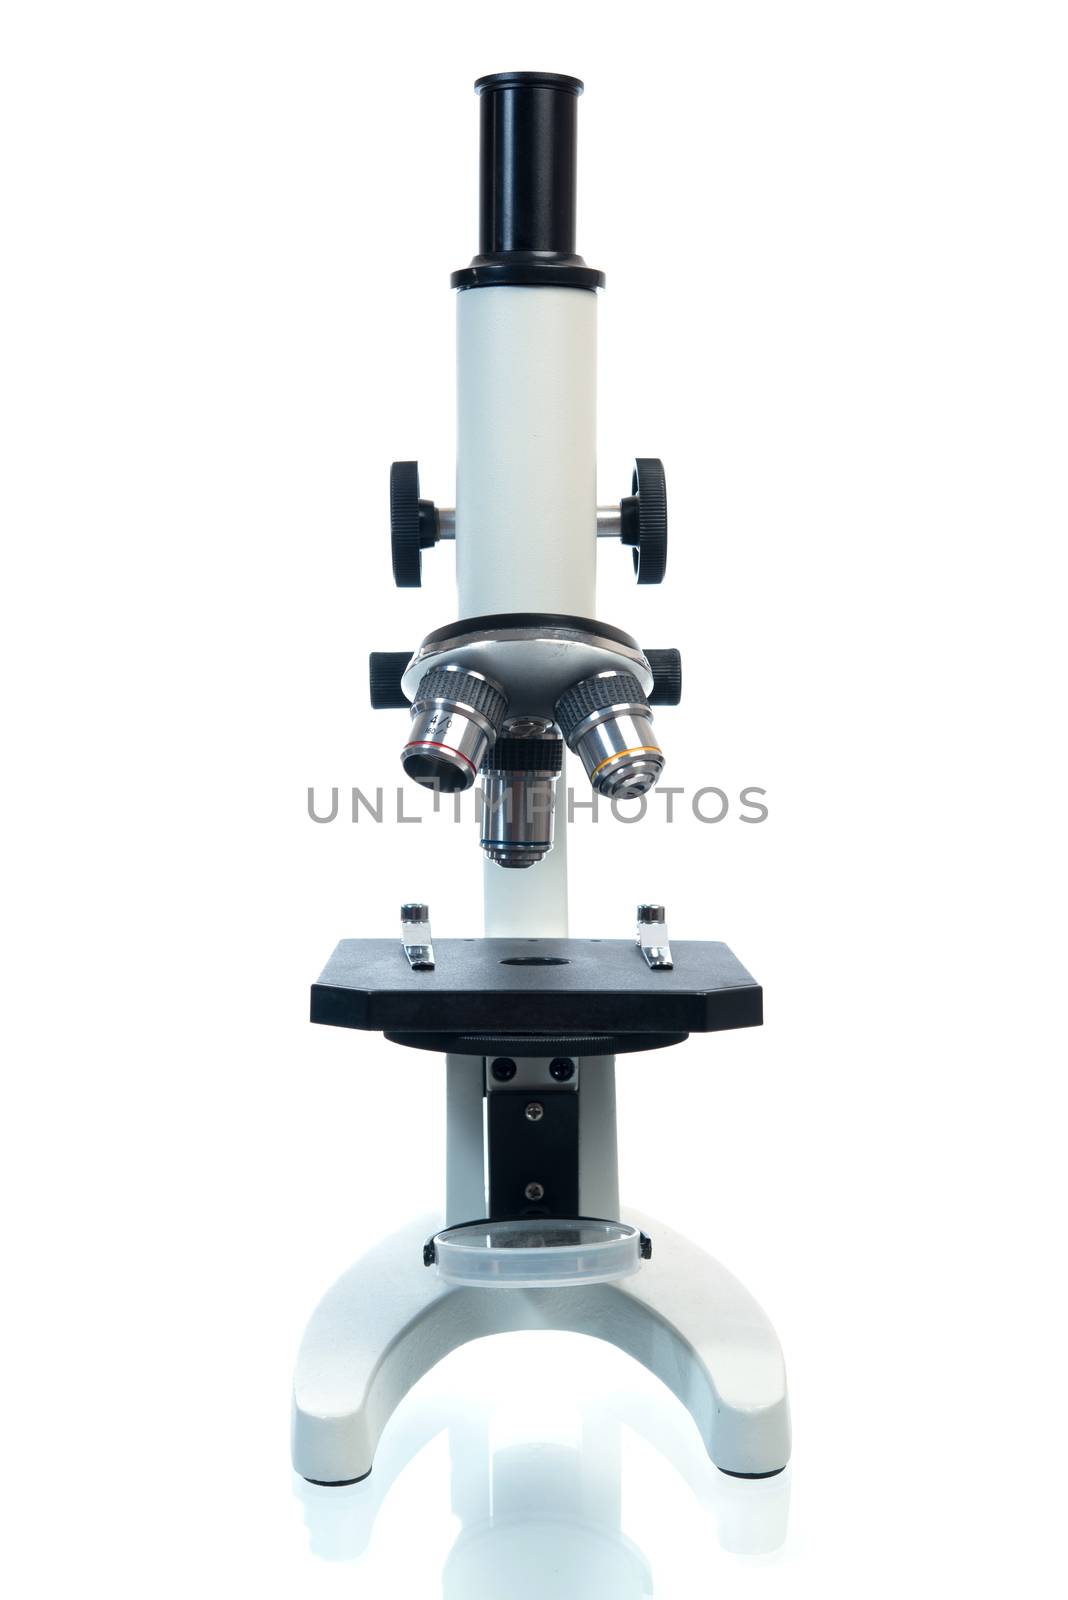 microscope isolated on white background by Lerttanapunyaporn